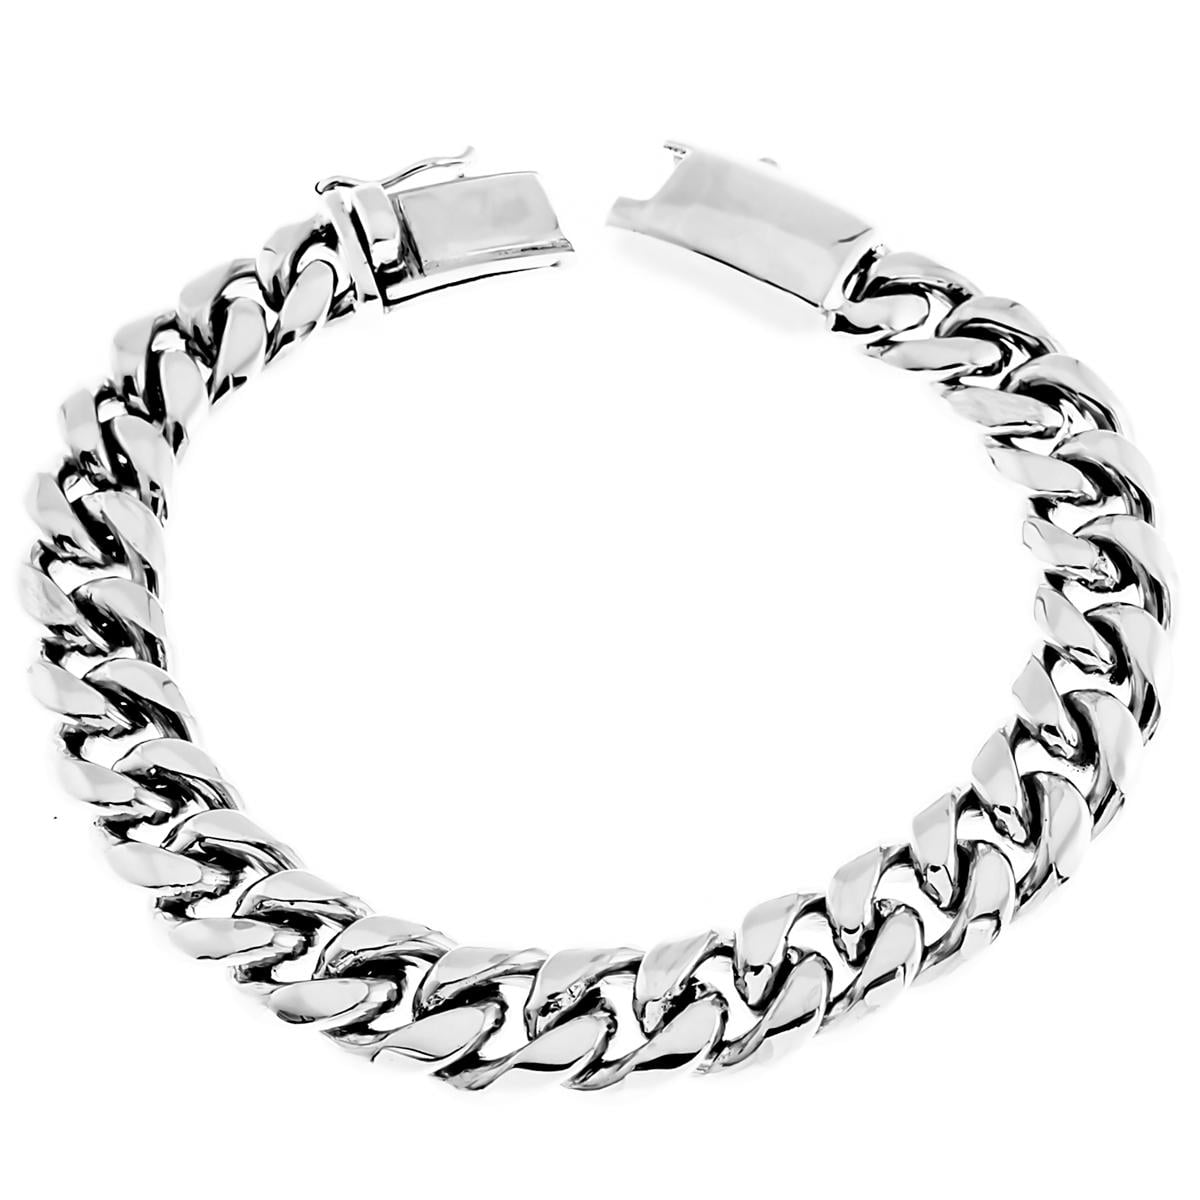 Epinki Gold Plated Chain Bracelet for Men Leather Bracelet Braided Rope Charm Bangle Black Bracelet